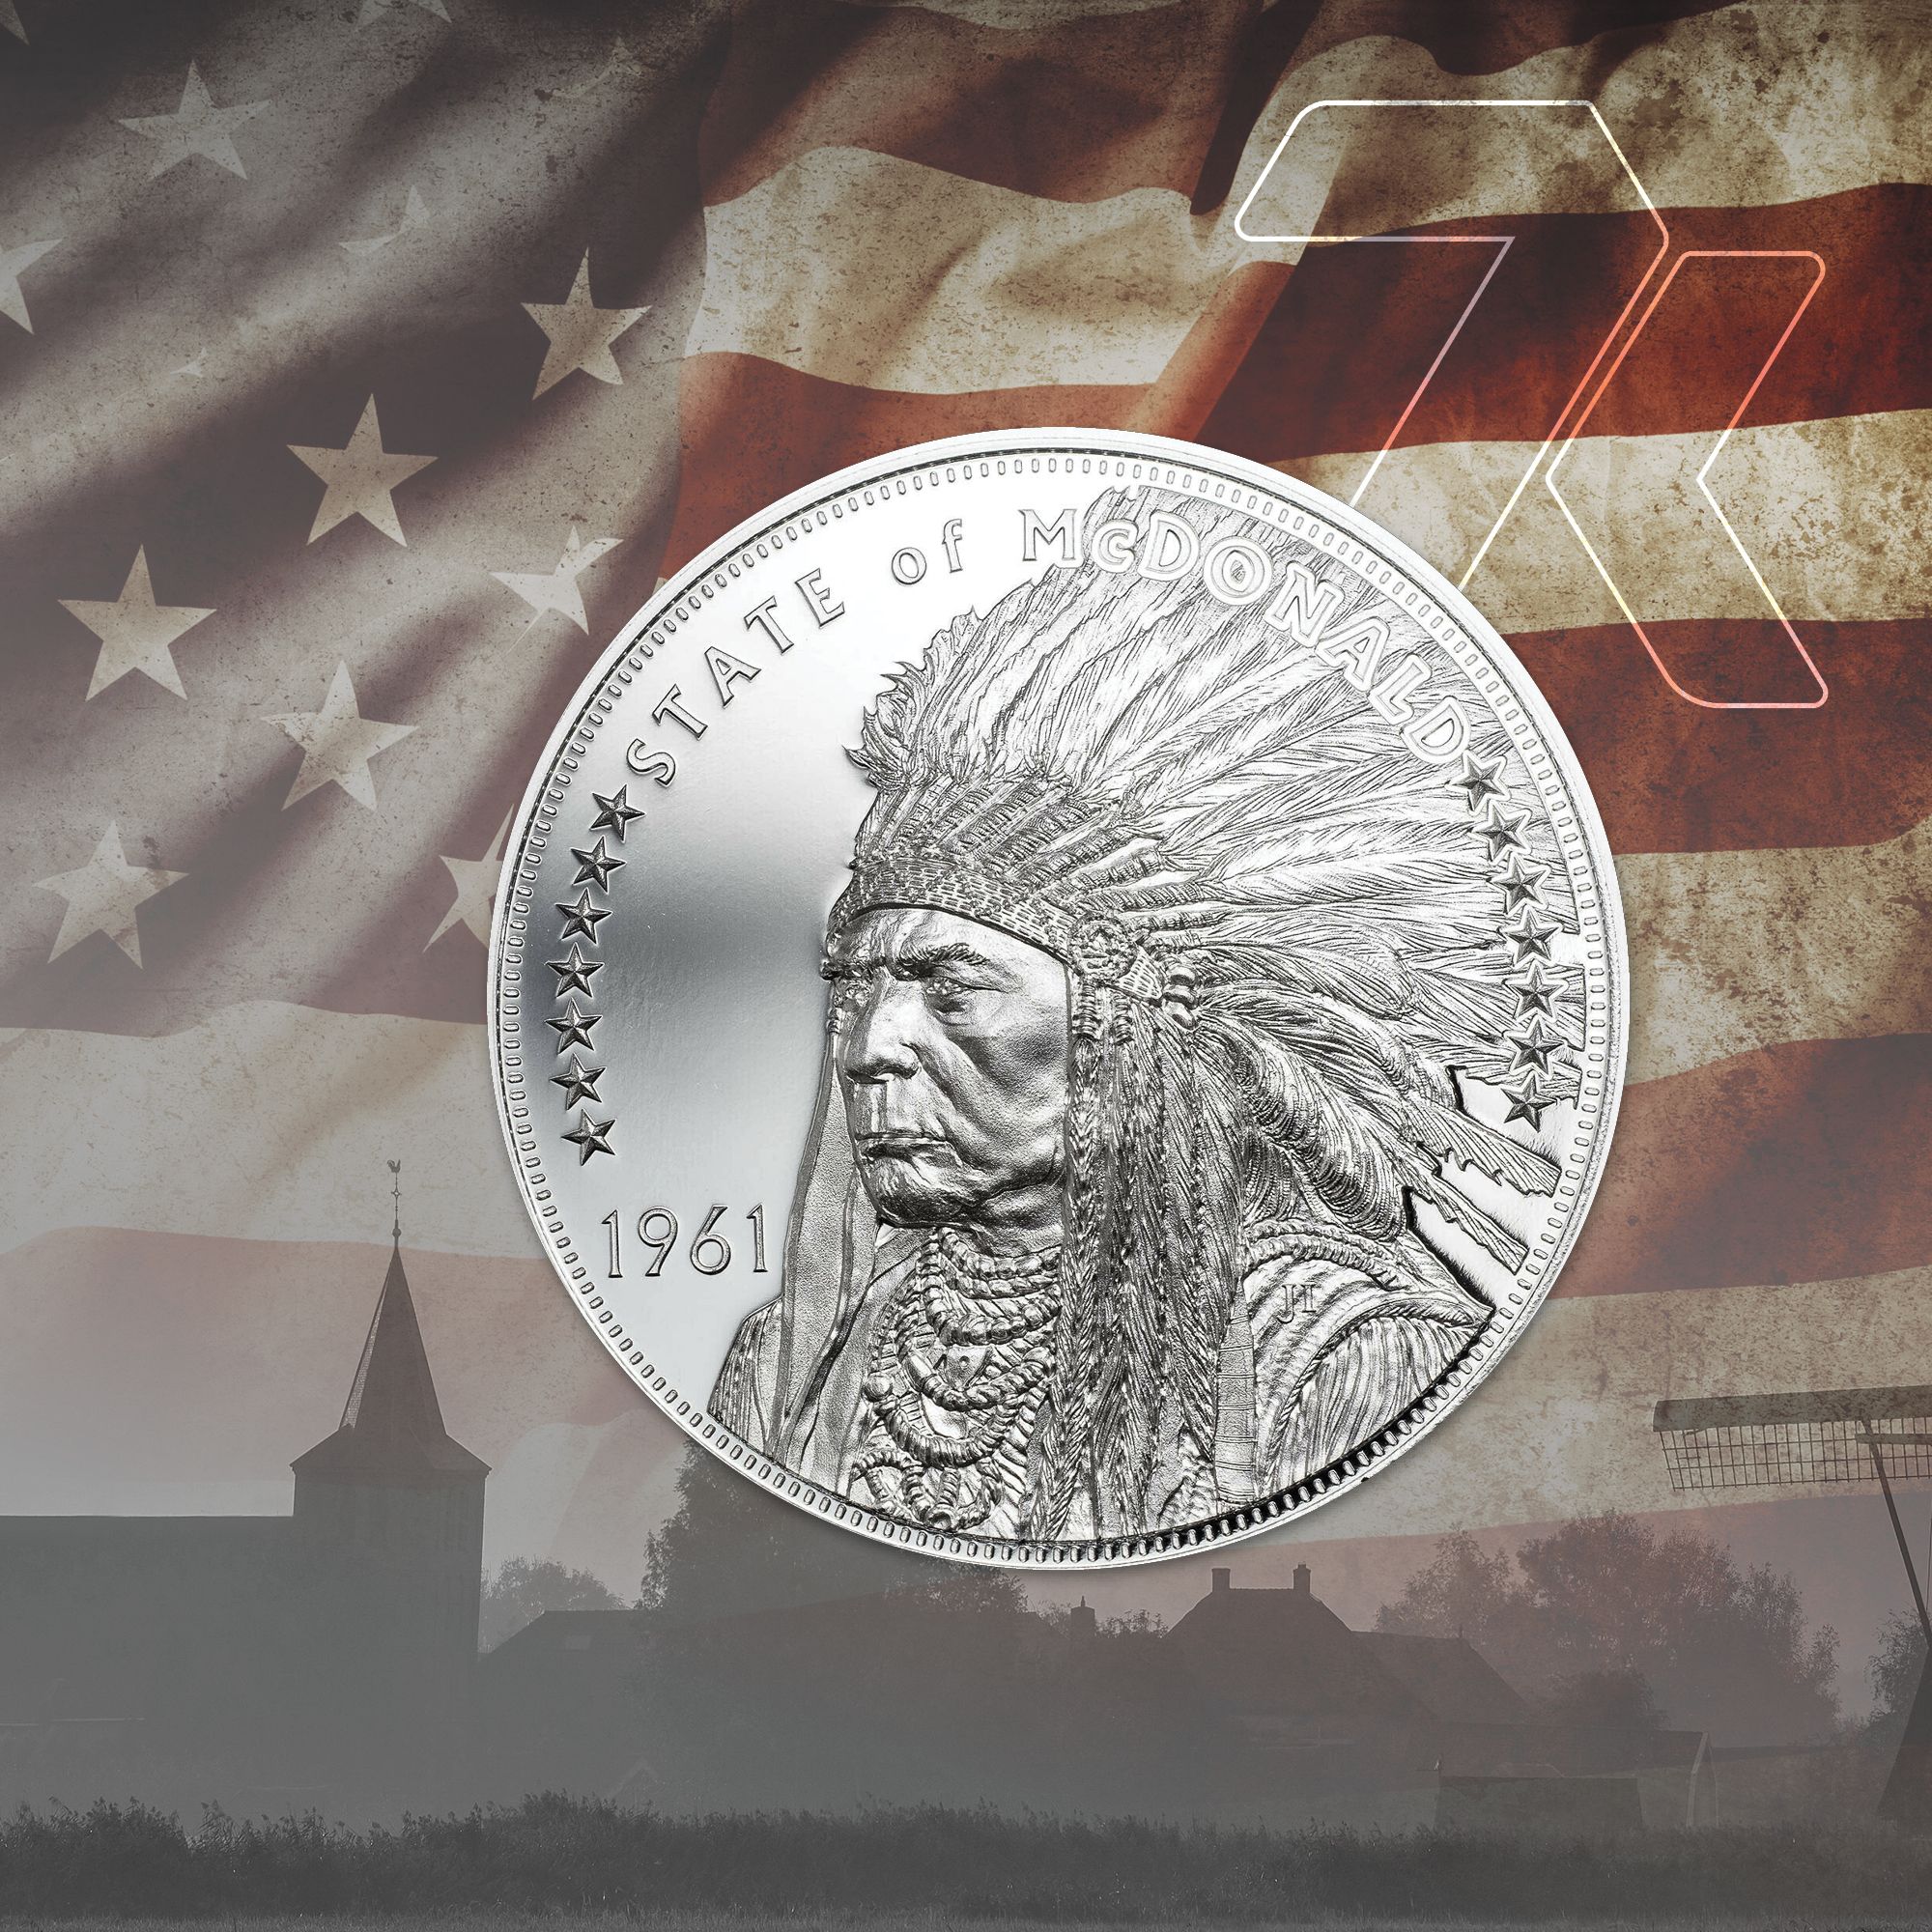 2020 Lost States of America McDonald 1 oz Silver Coin